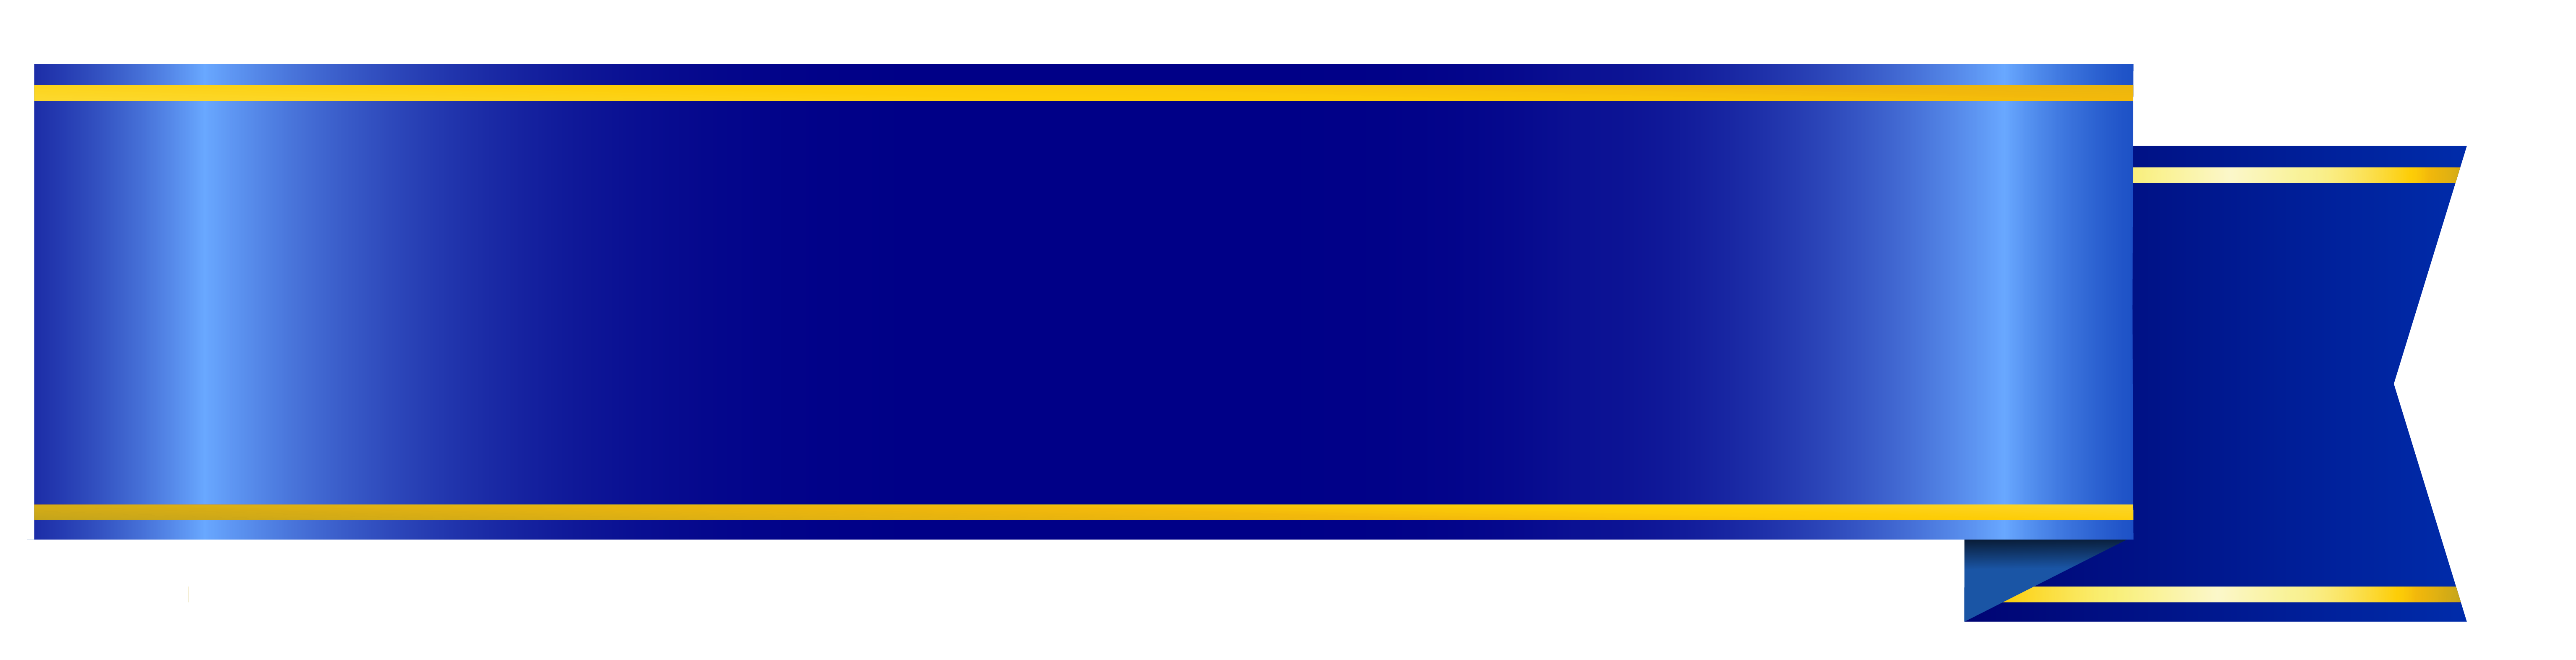 Banner azul Imagen PNG Transparente